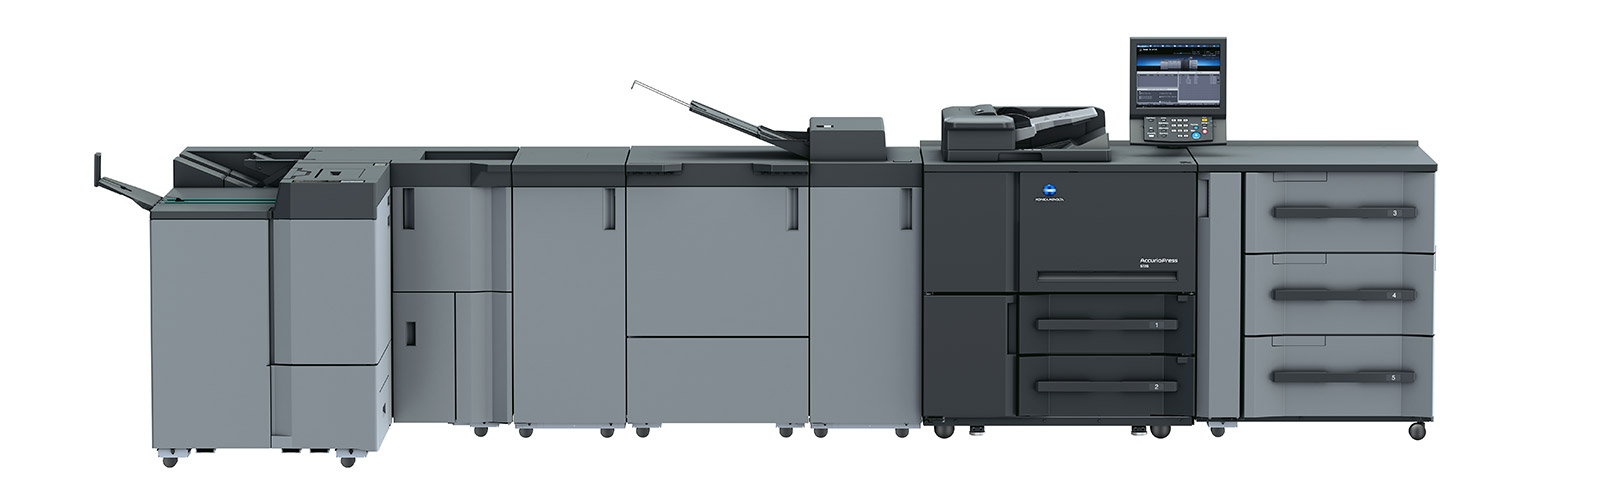 Konica Minolta AccurioPress C6136 Print Production System